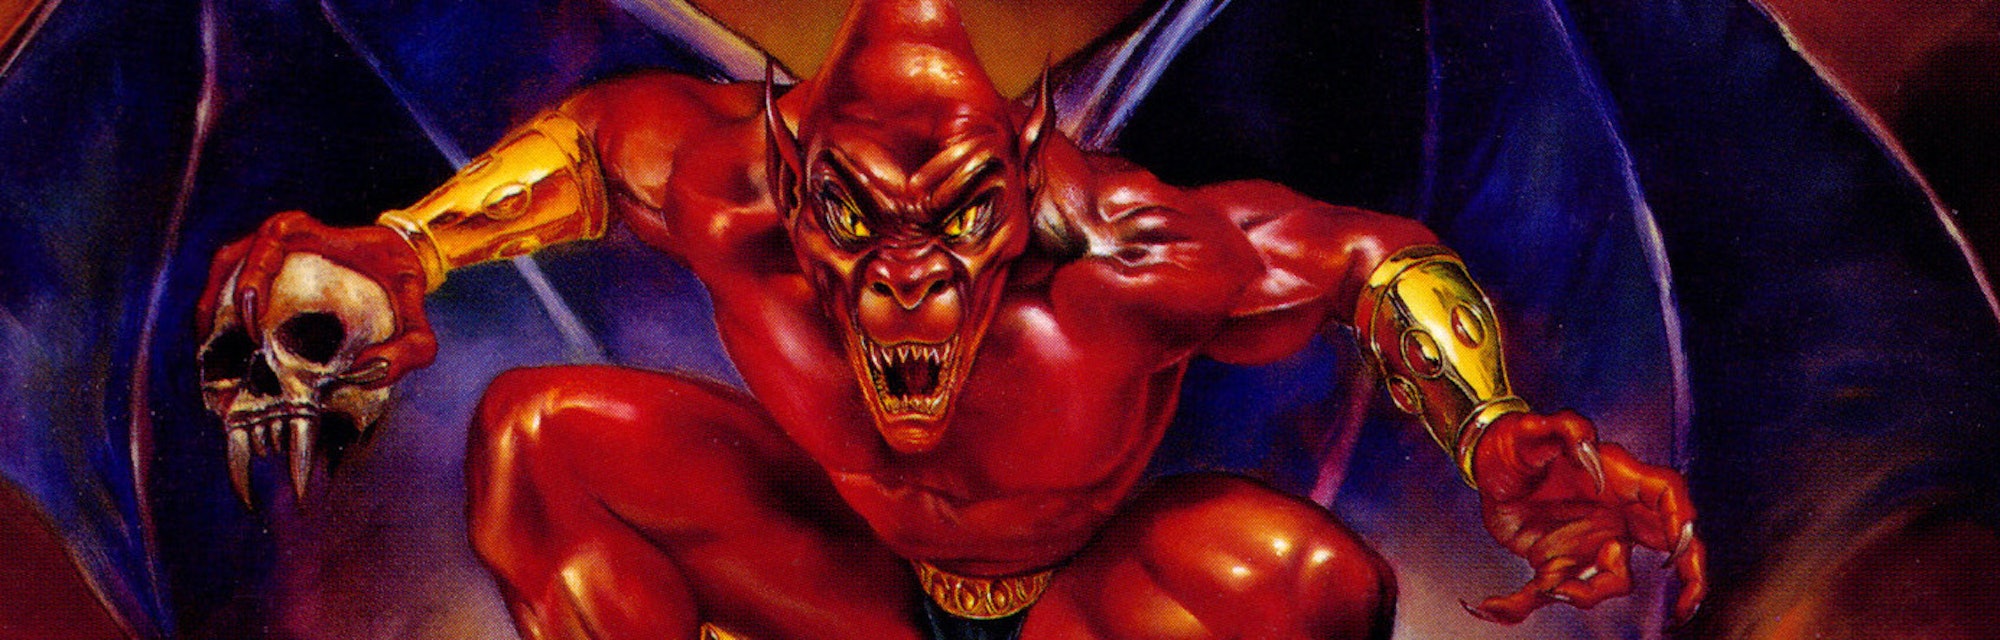 demons crest game cover art